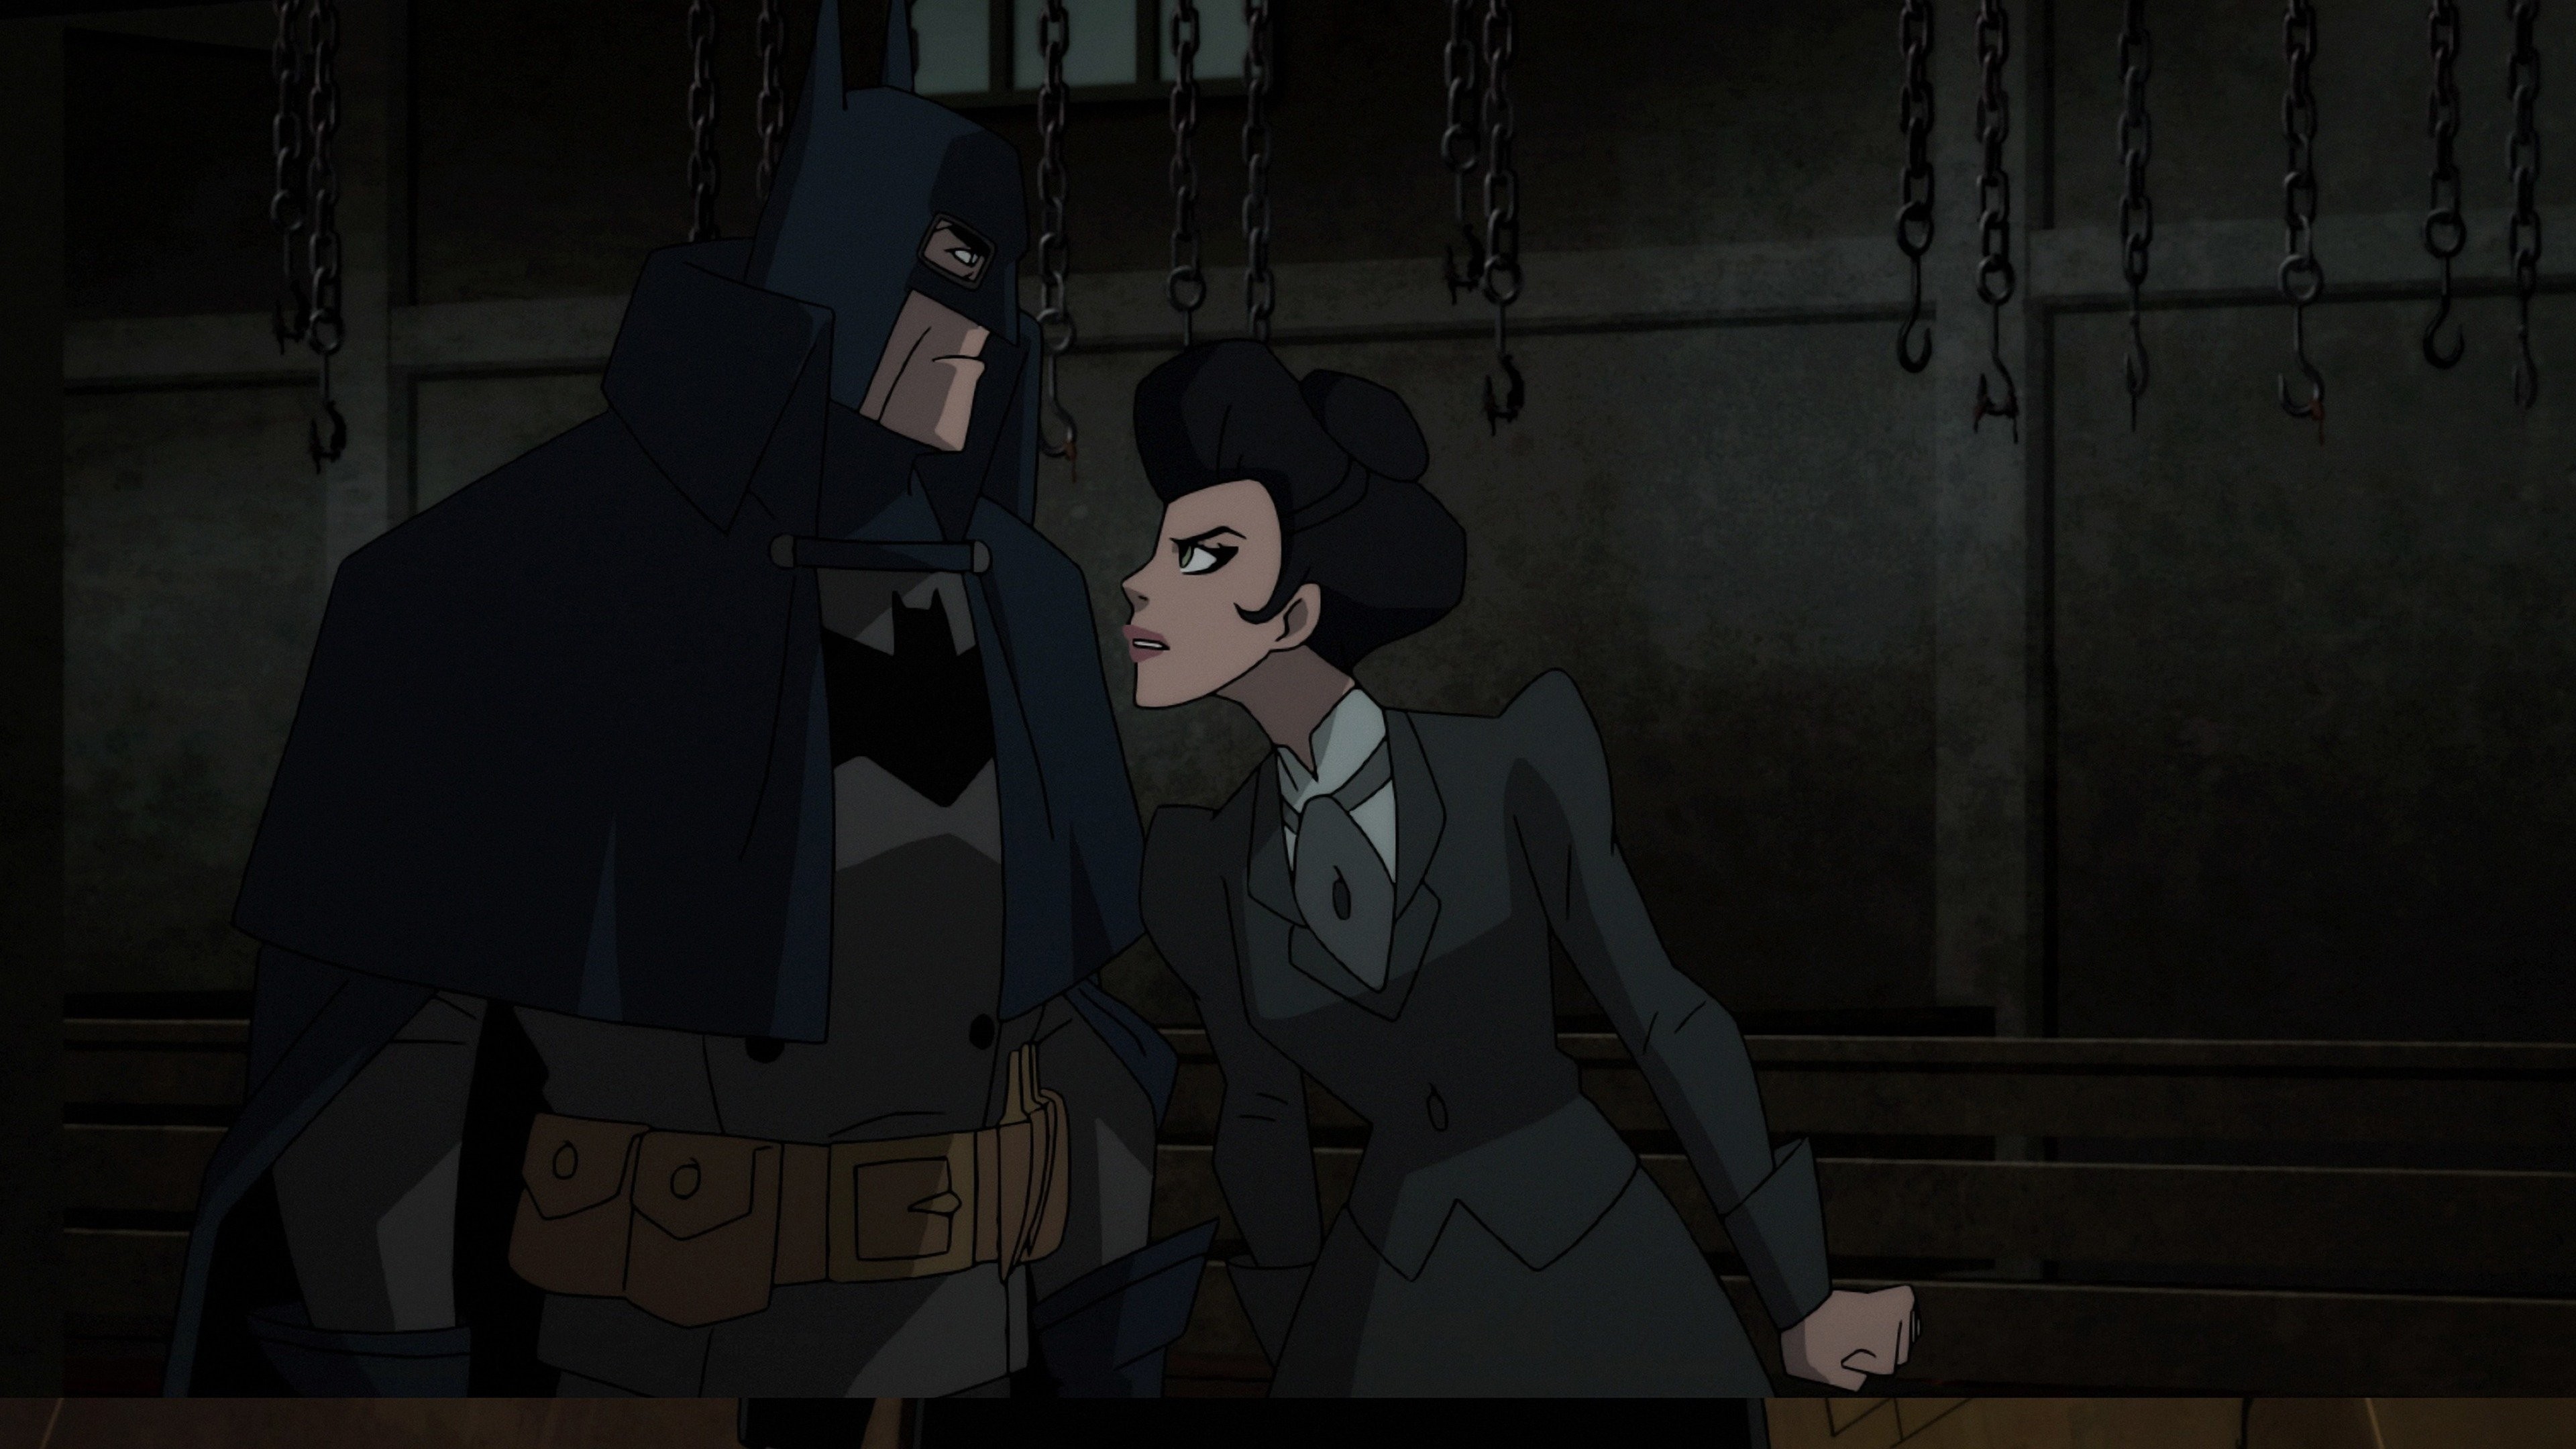 Batman: Gotham by Gaslight - Rotten Tomatoes